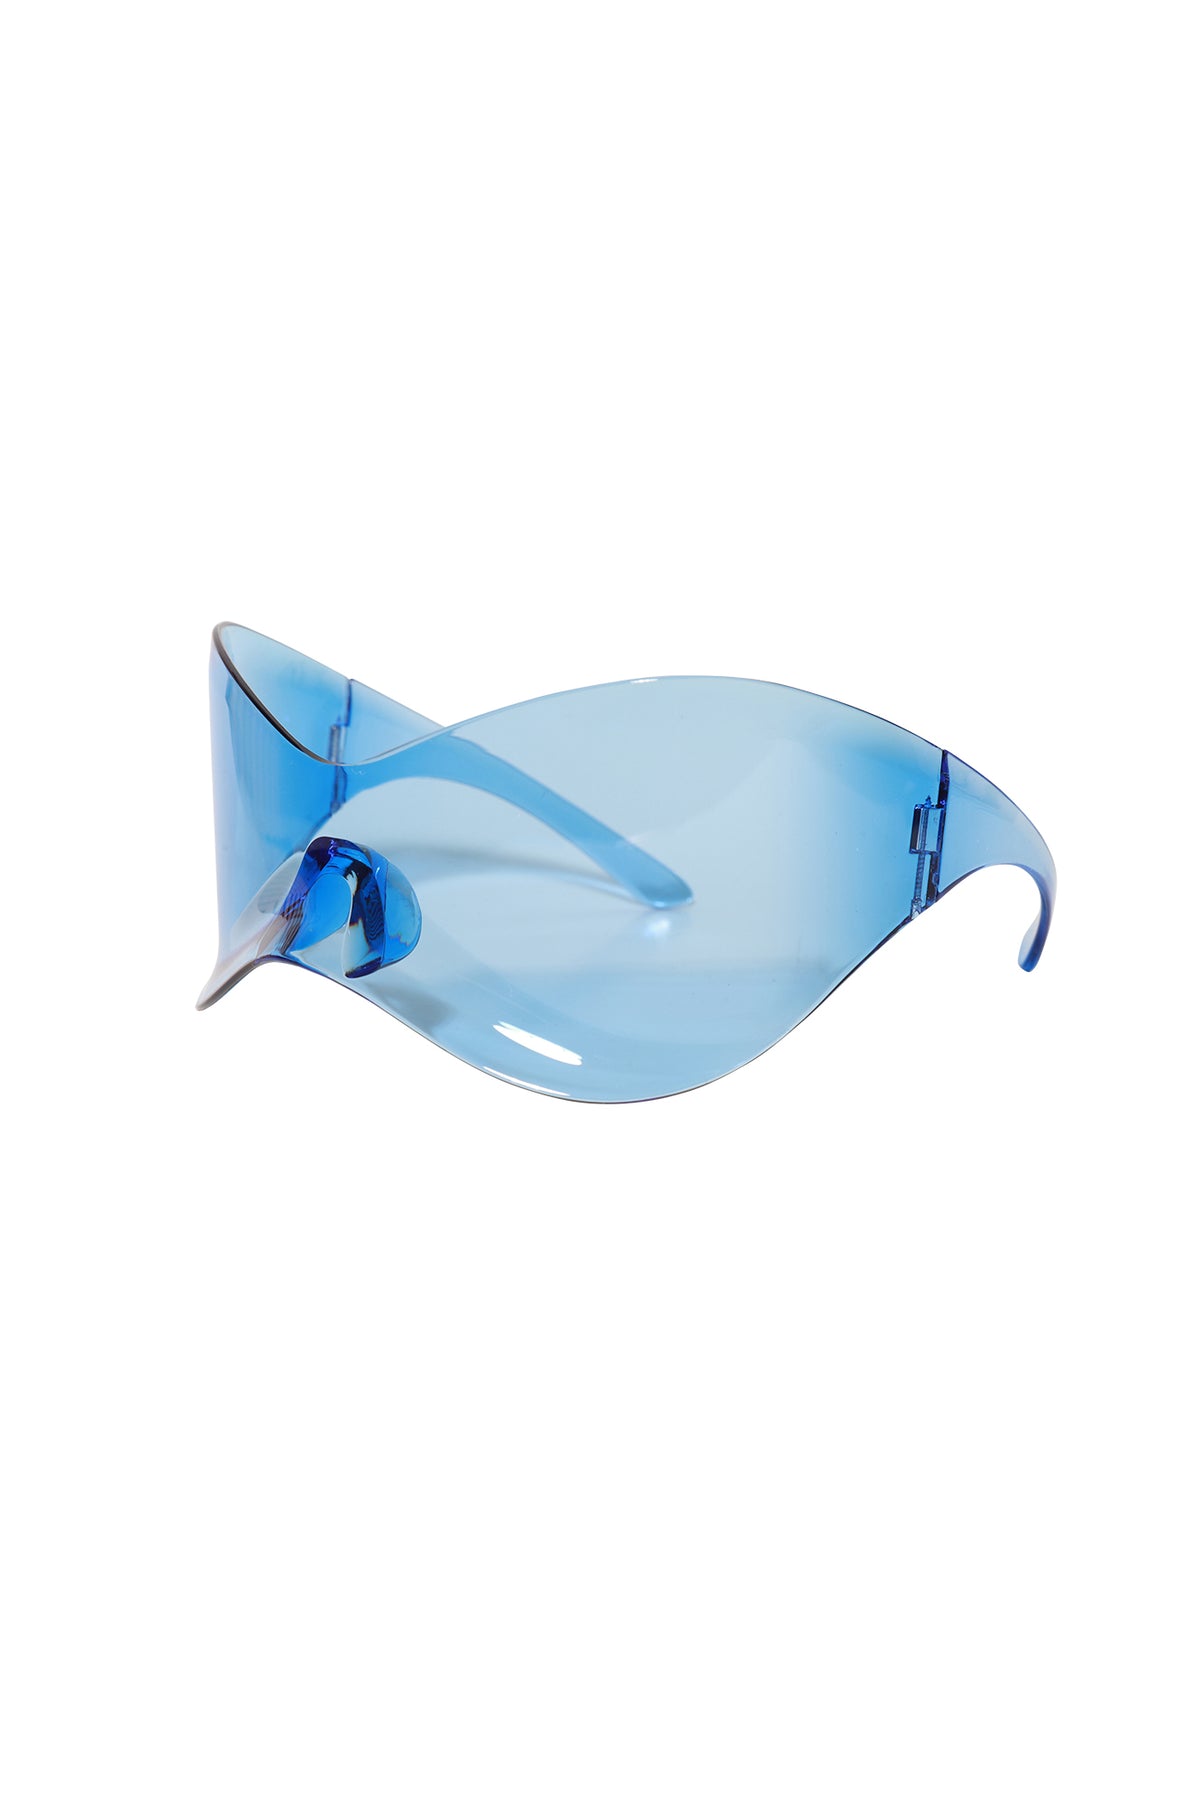 
              Final Score Curved Shield Sunglasses - Blue - Swank A Posh
            